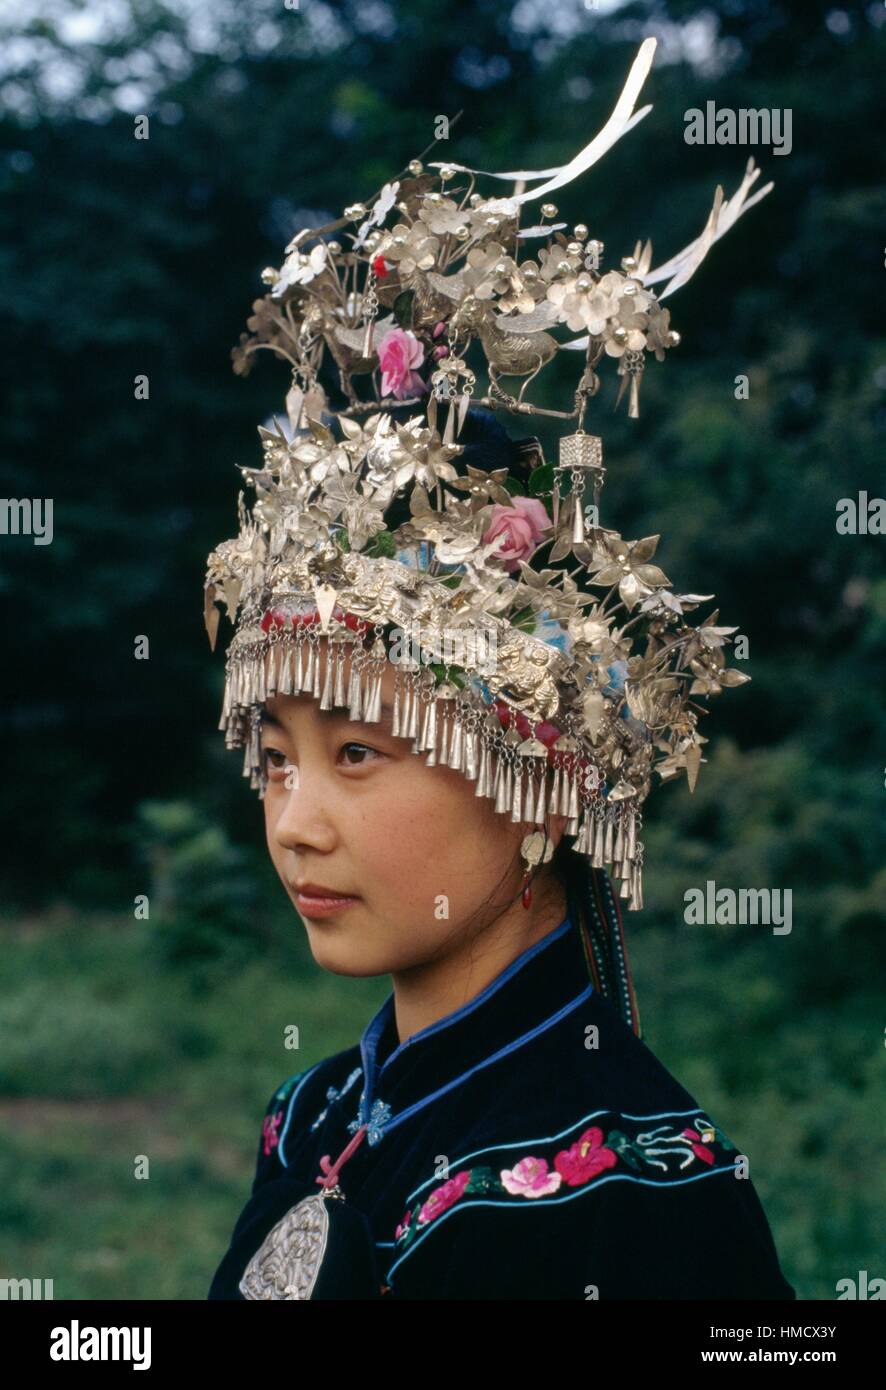 A girl wearing a traditional headdress, Miao people, China. Stock Photo